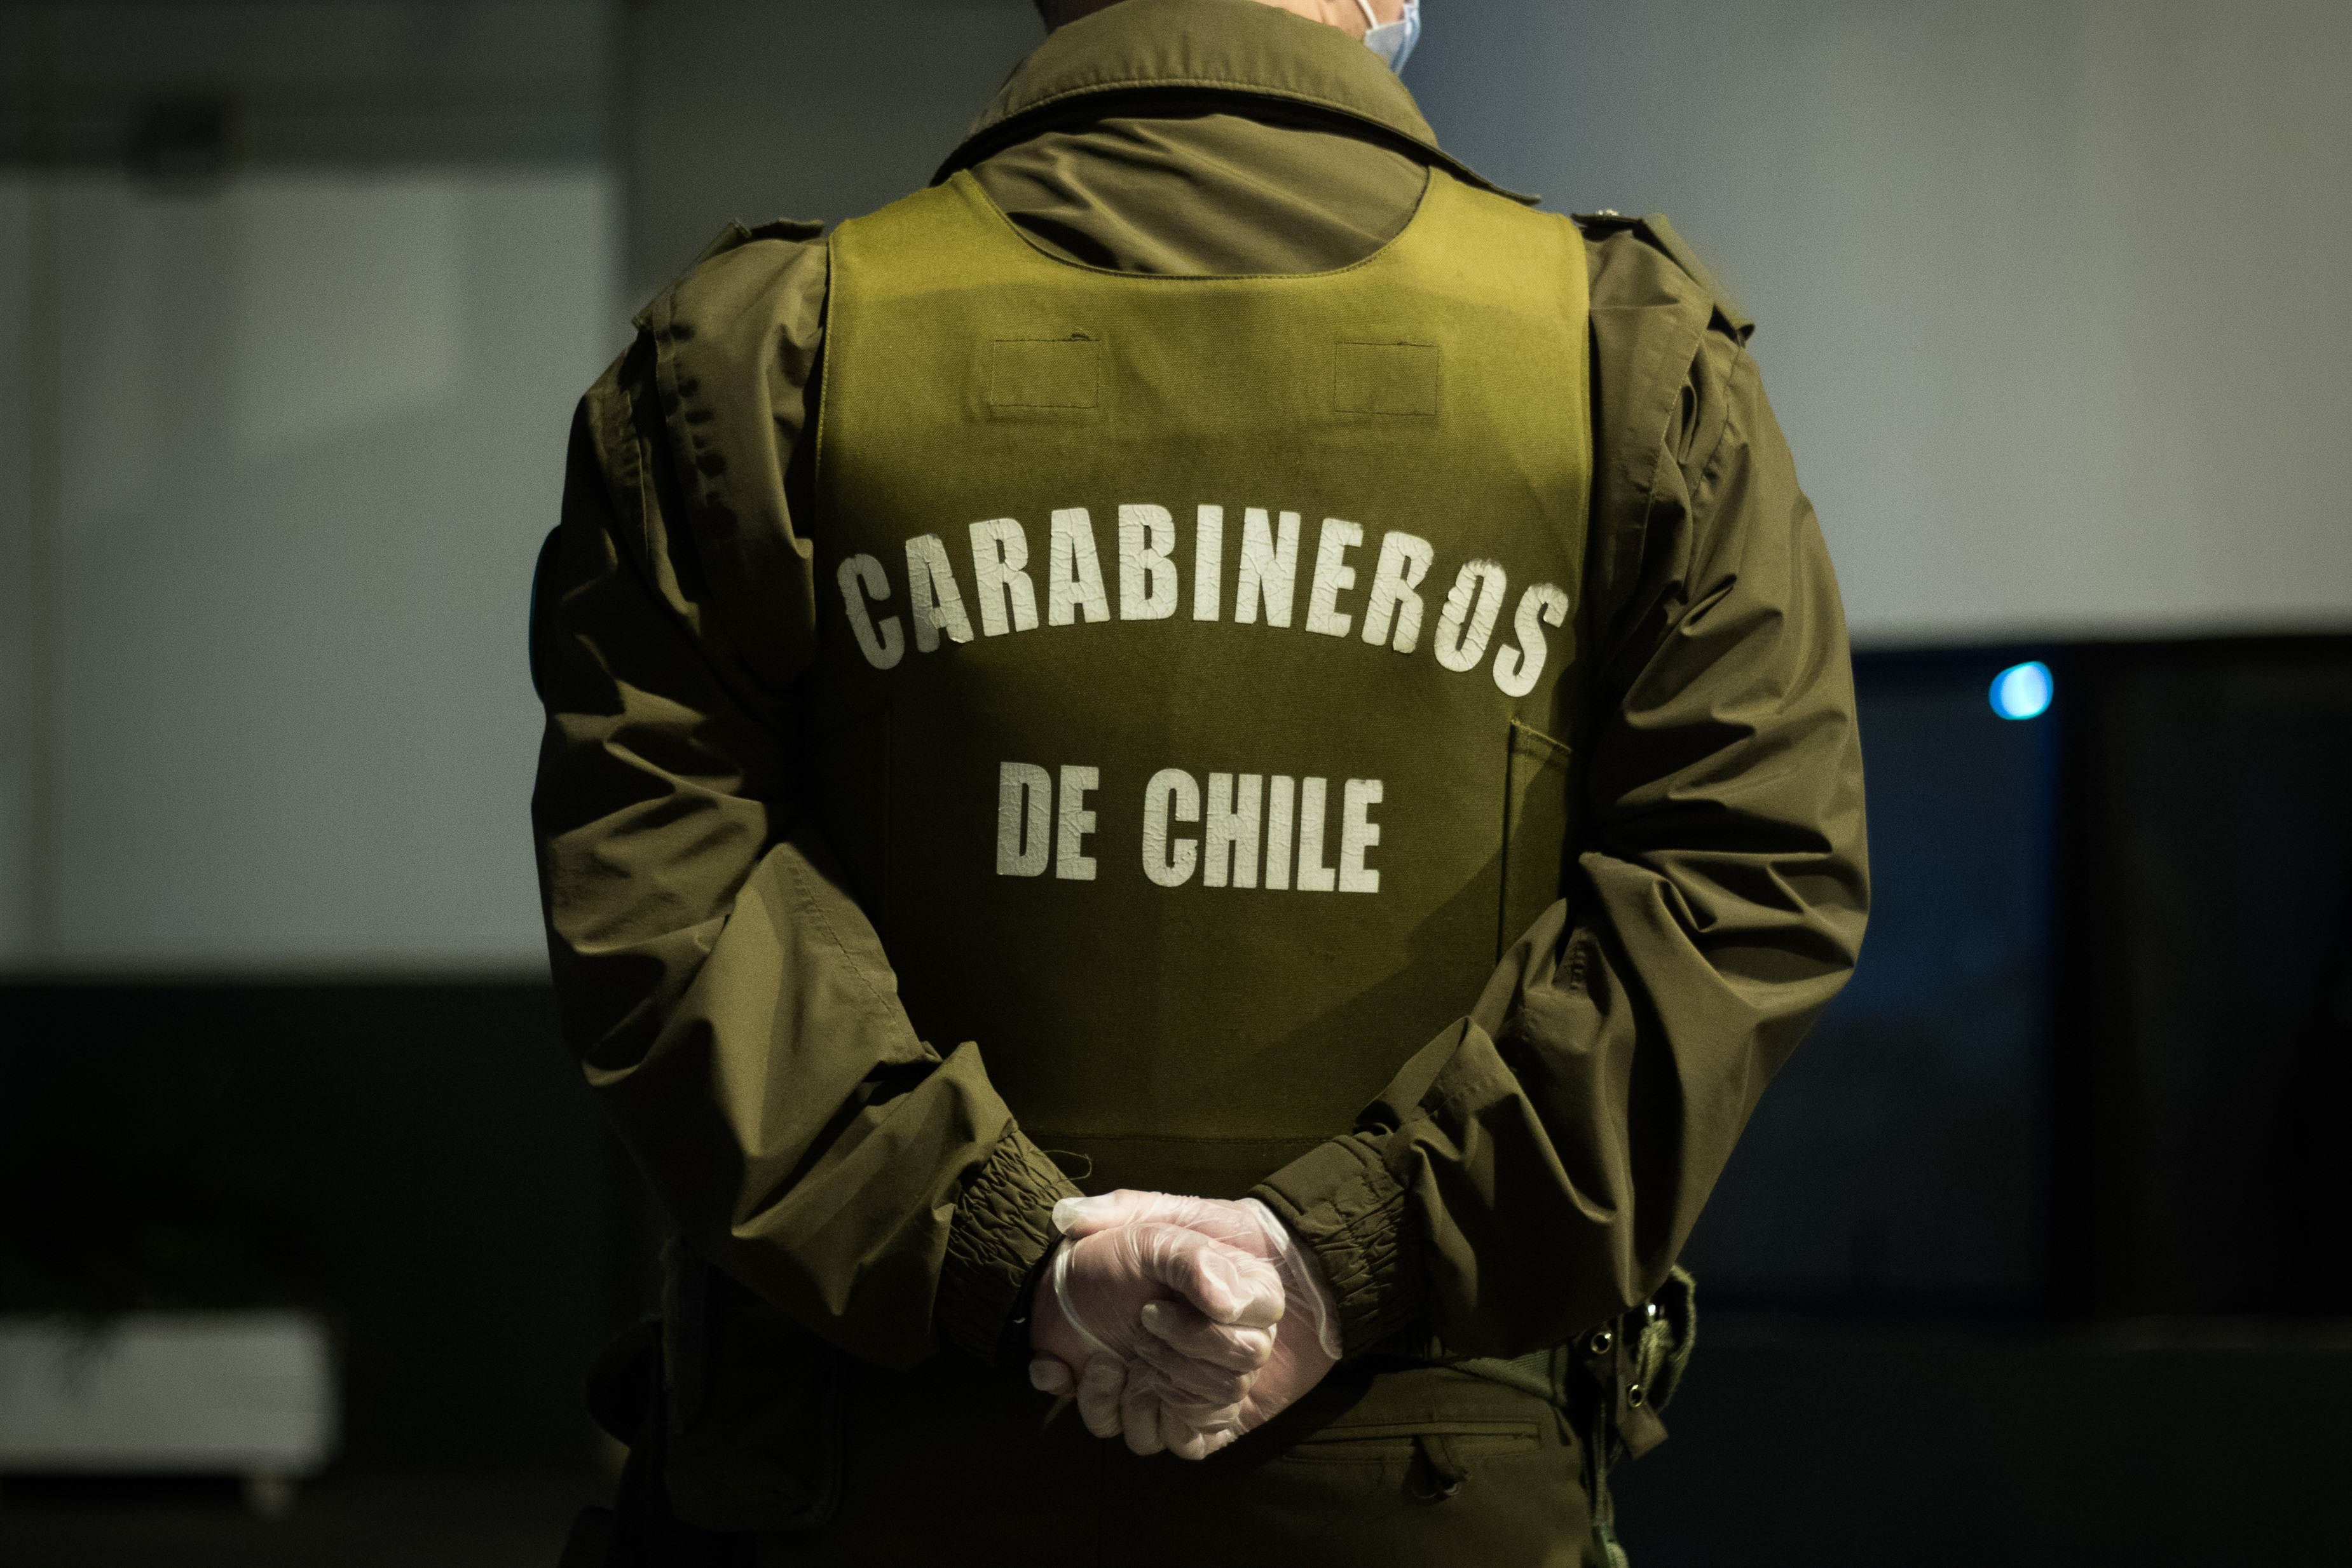 29/05/2020 Agente de la policía de Chile, Carabineros
POLITICA SUDAMÉRICA CHILE
LEONARDO RUBILAR/AGENCIAUNO / LEONARDO RUBILAR
